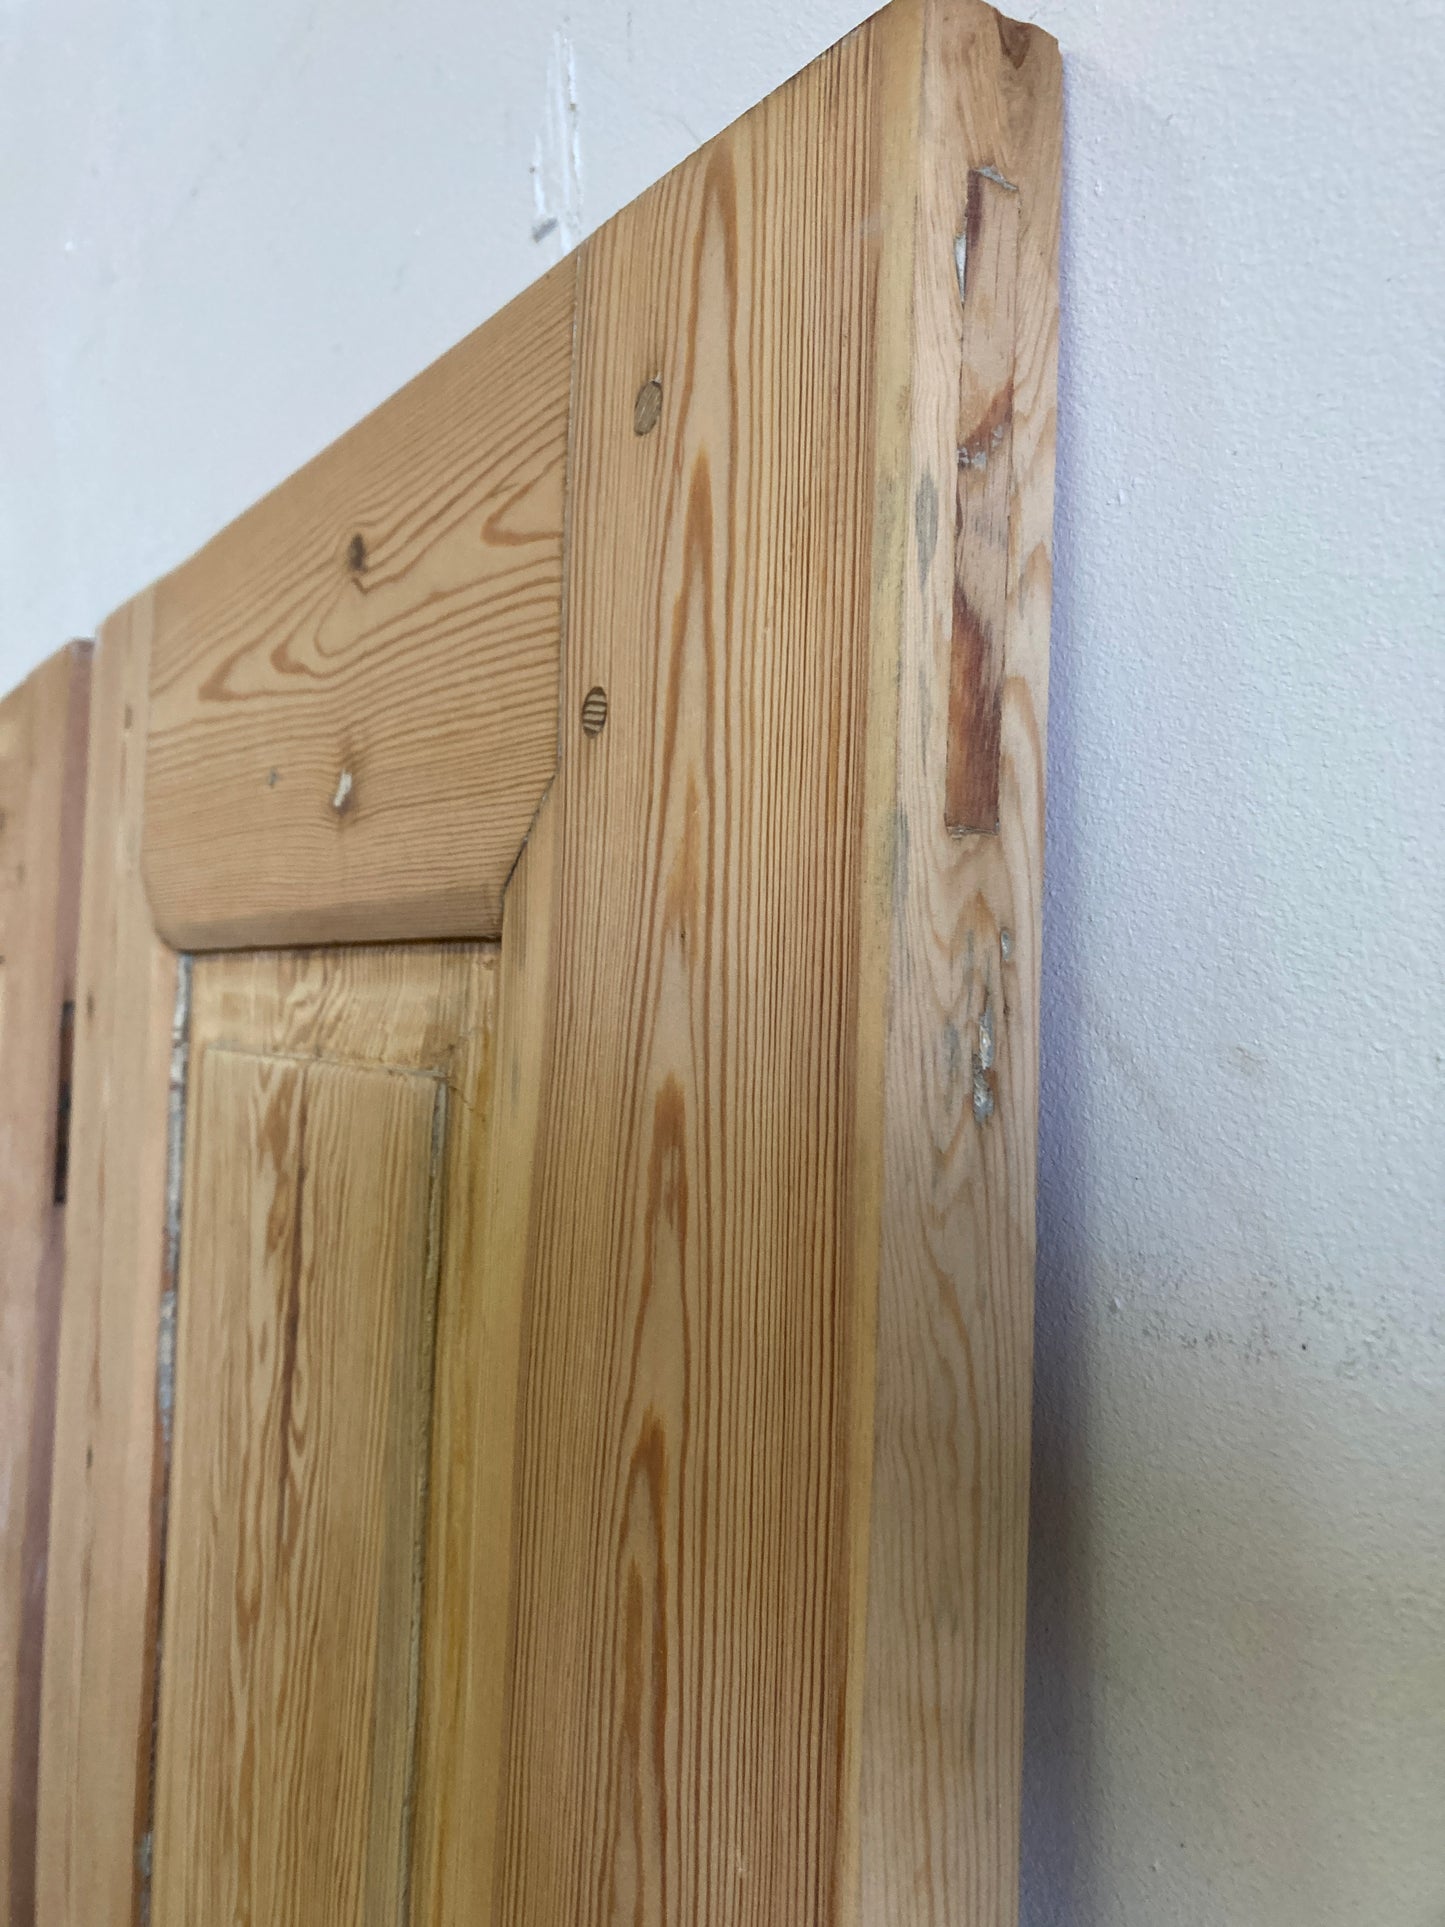 Dubbele houten binnendeur - afgeschuurd (198 x 56)